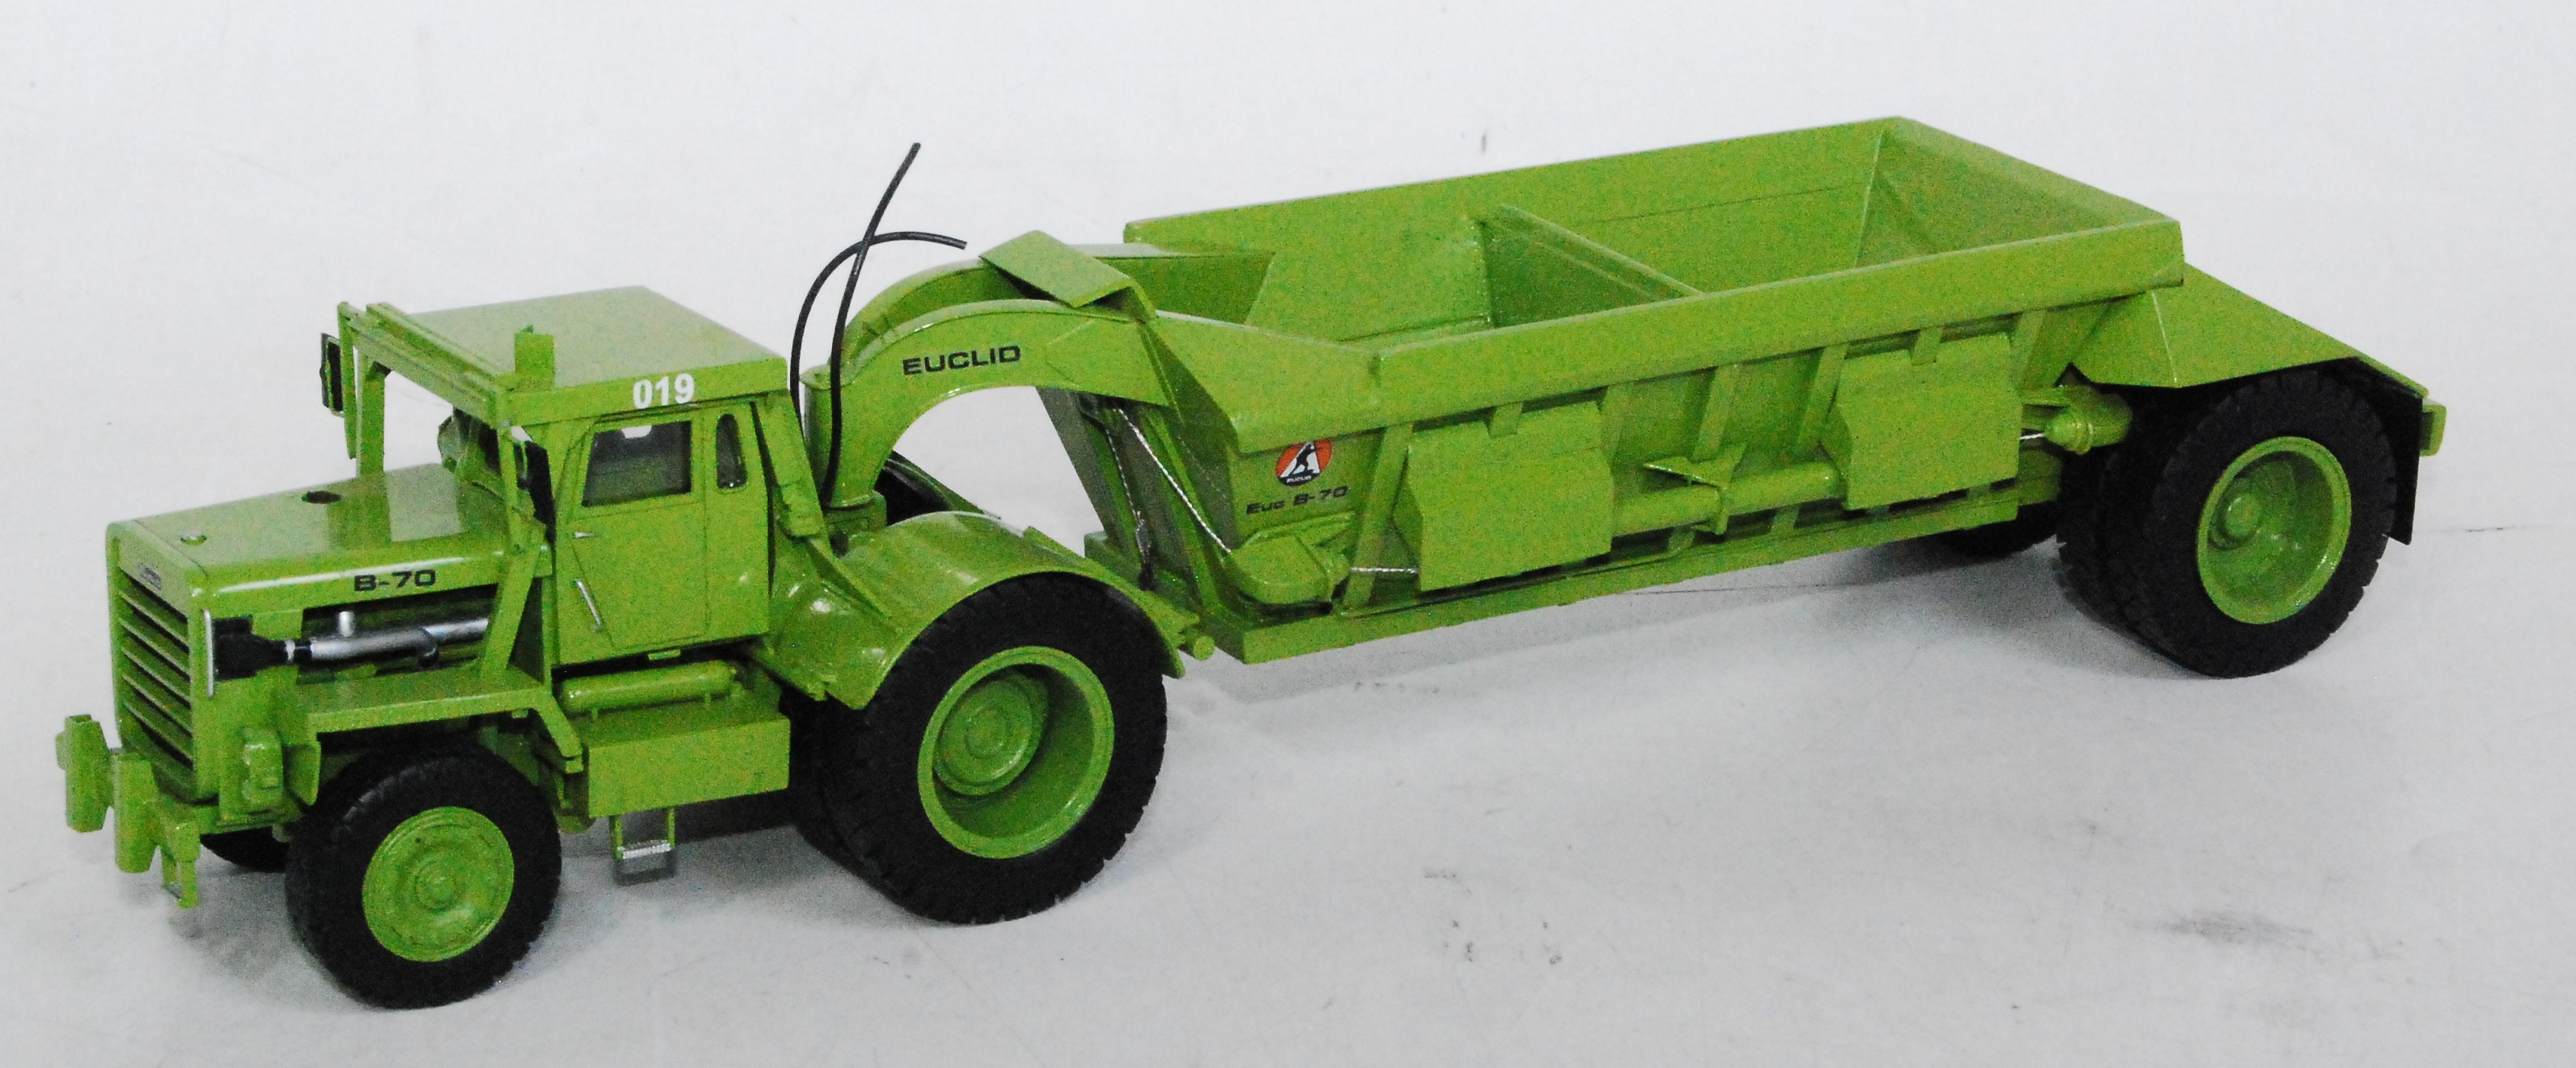 A Dan Models 1/50 sale resin factory built model of a Euclid D70 tractor/trailer bottom dump, nicely